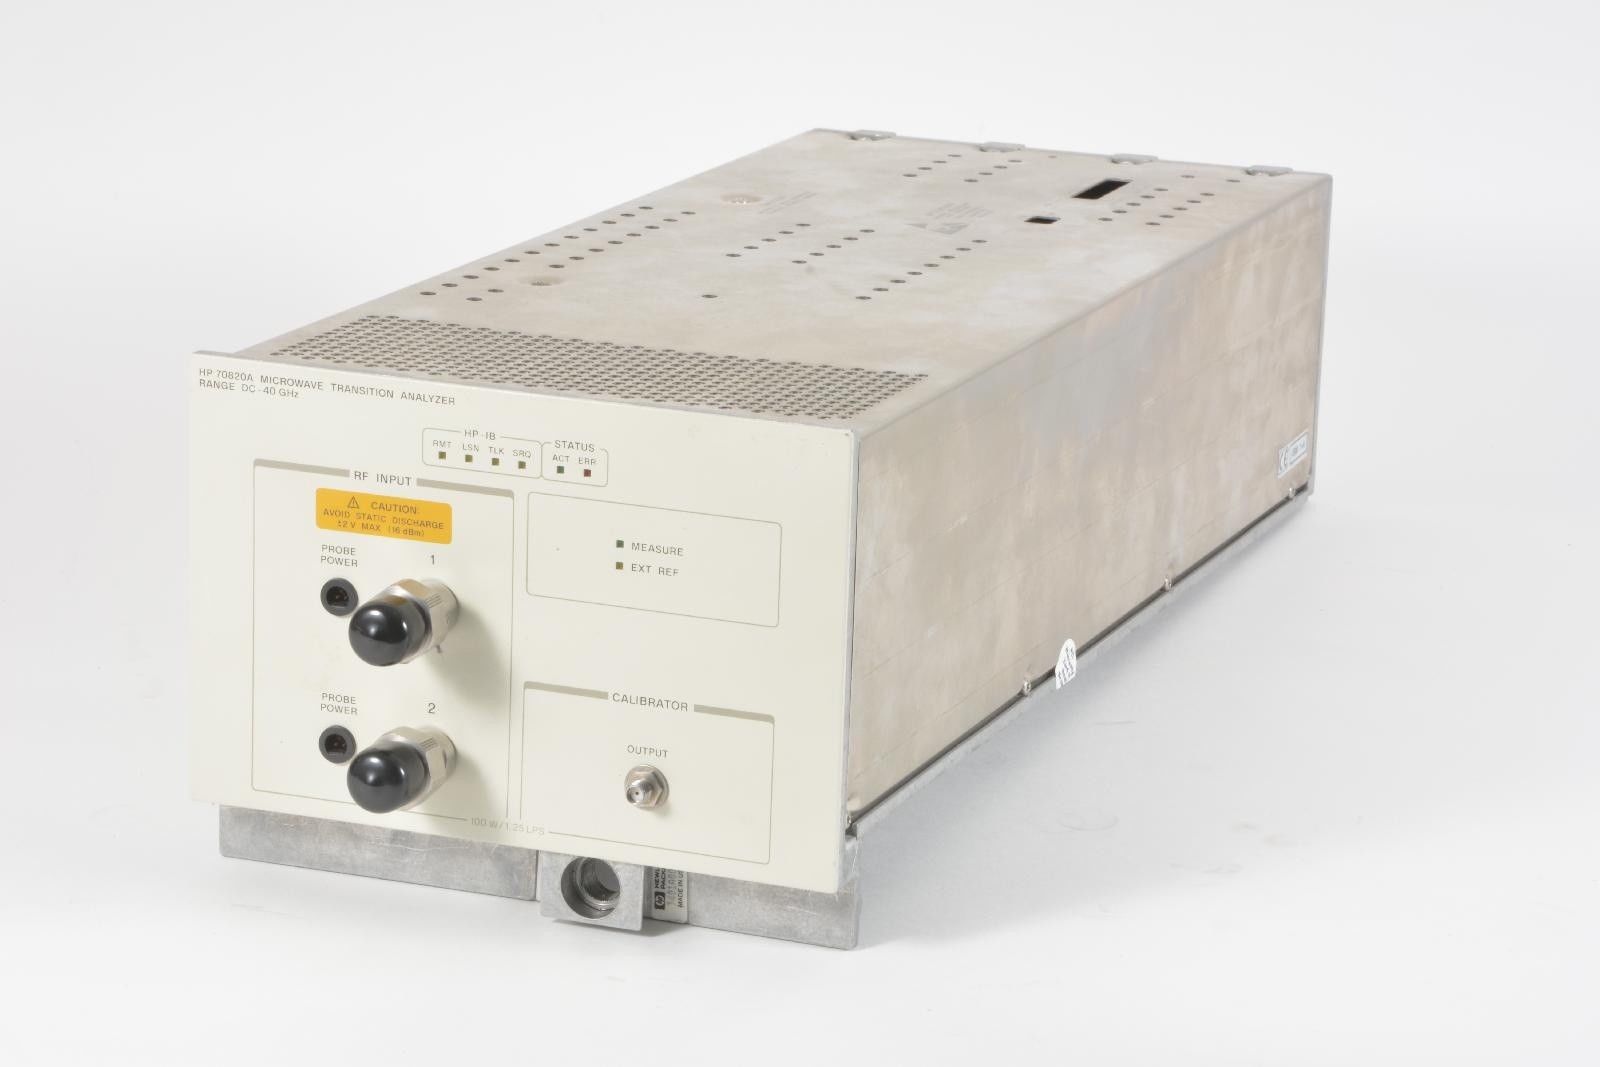 hp-70820a-dc-40-ghz-microwave-transition-analyzer-emc-equipment-for-sale-0.jpg